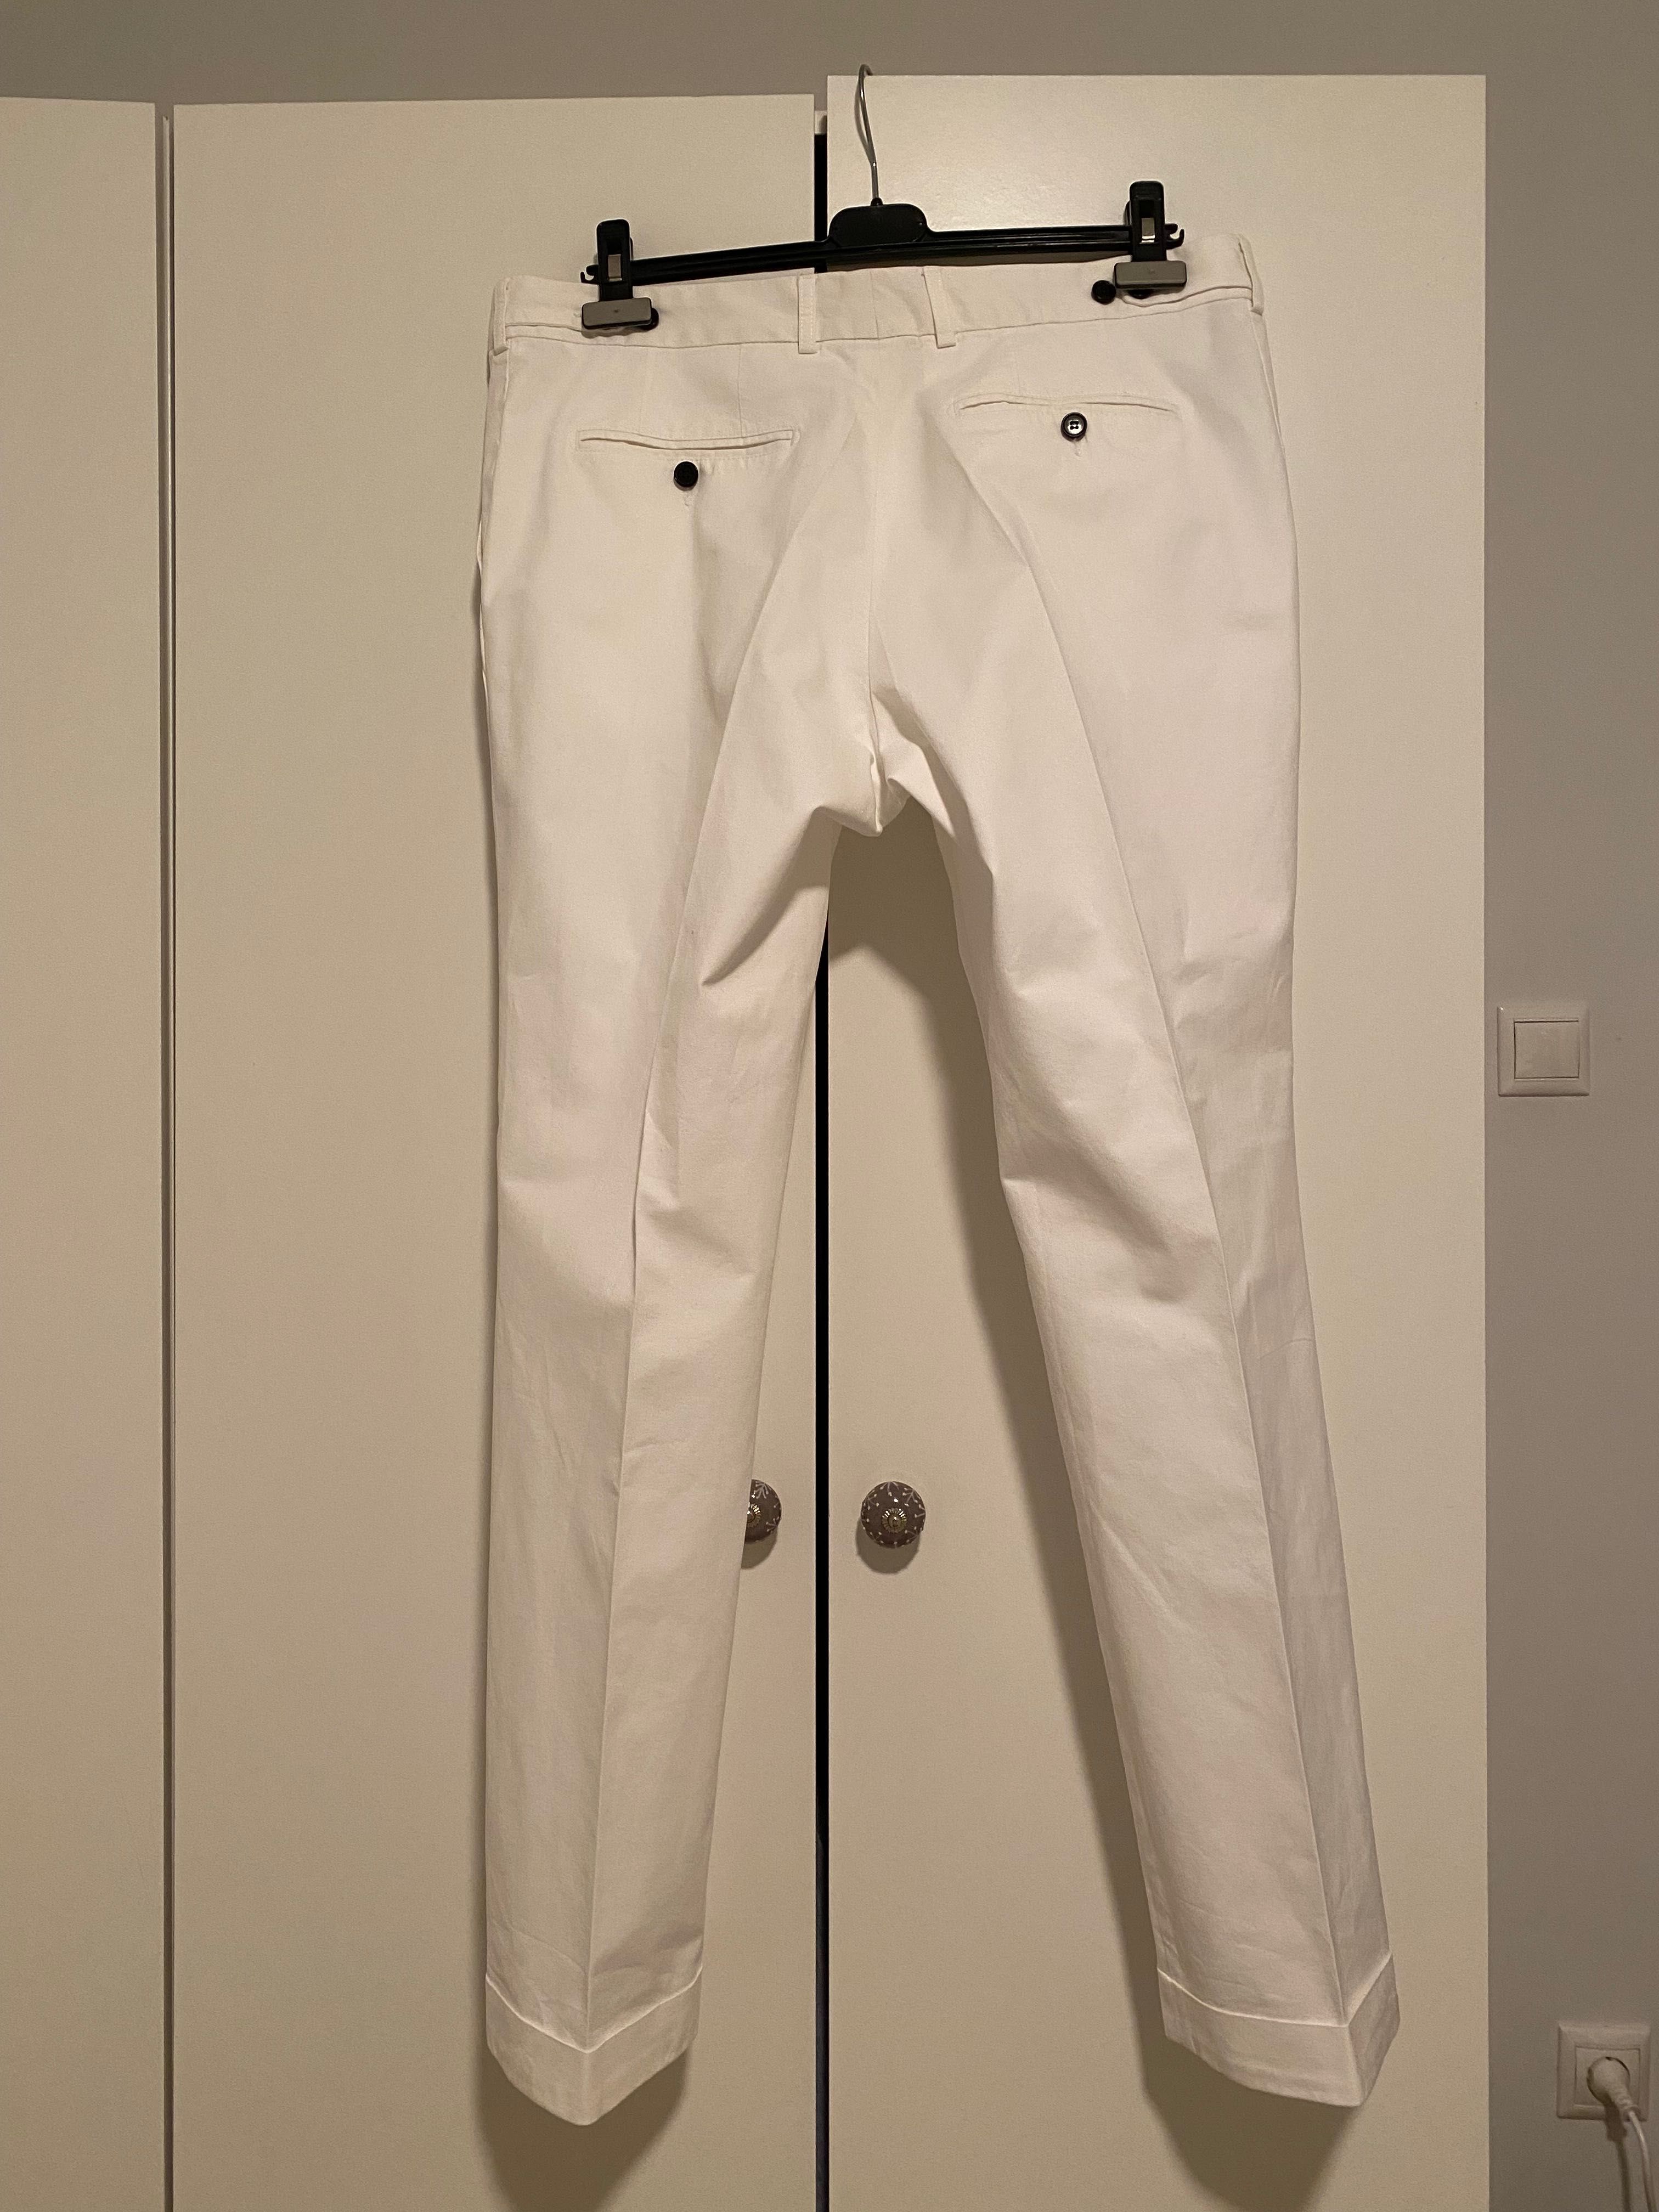 Spodnie eleganckie białe Vistula Lantier 50